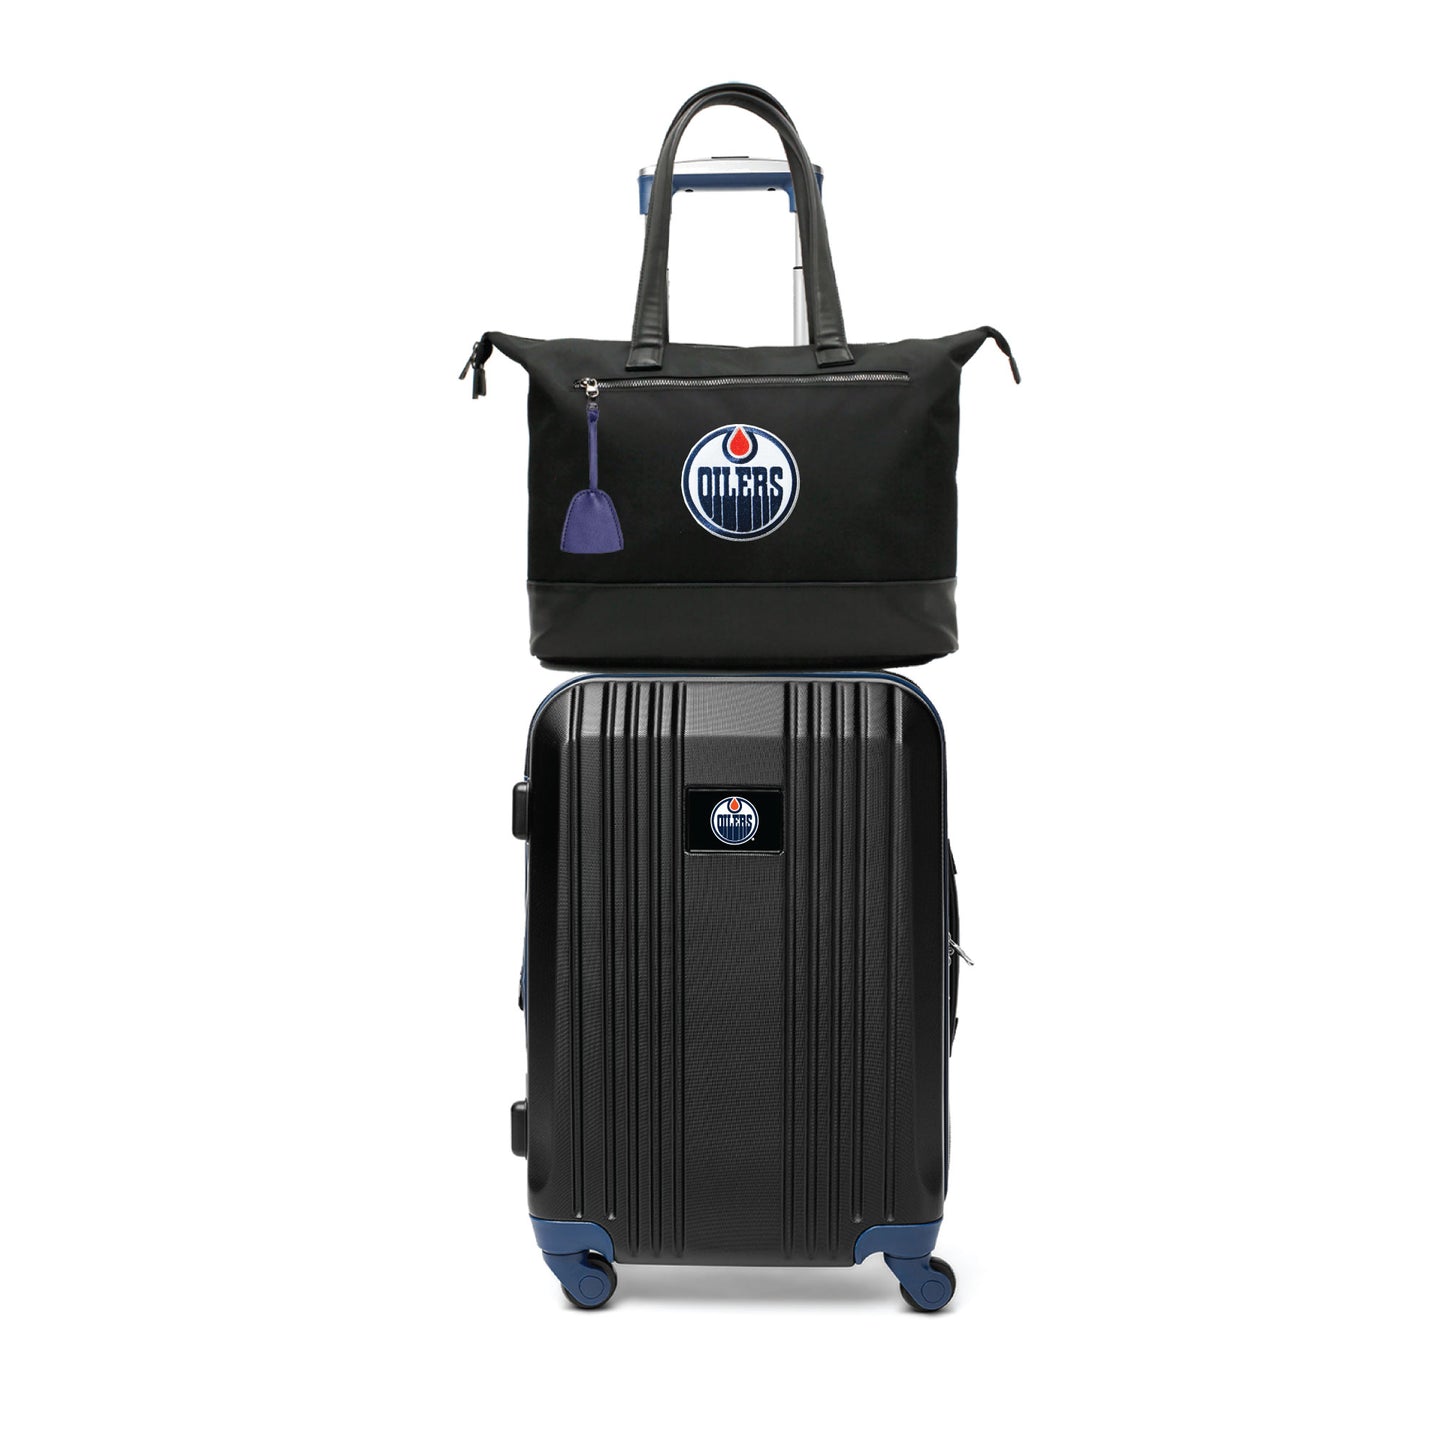 Edmonton Oilers Premium Laptop Tote Bag and Luggage Set